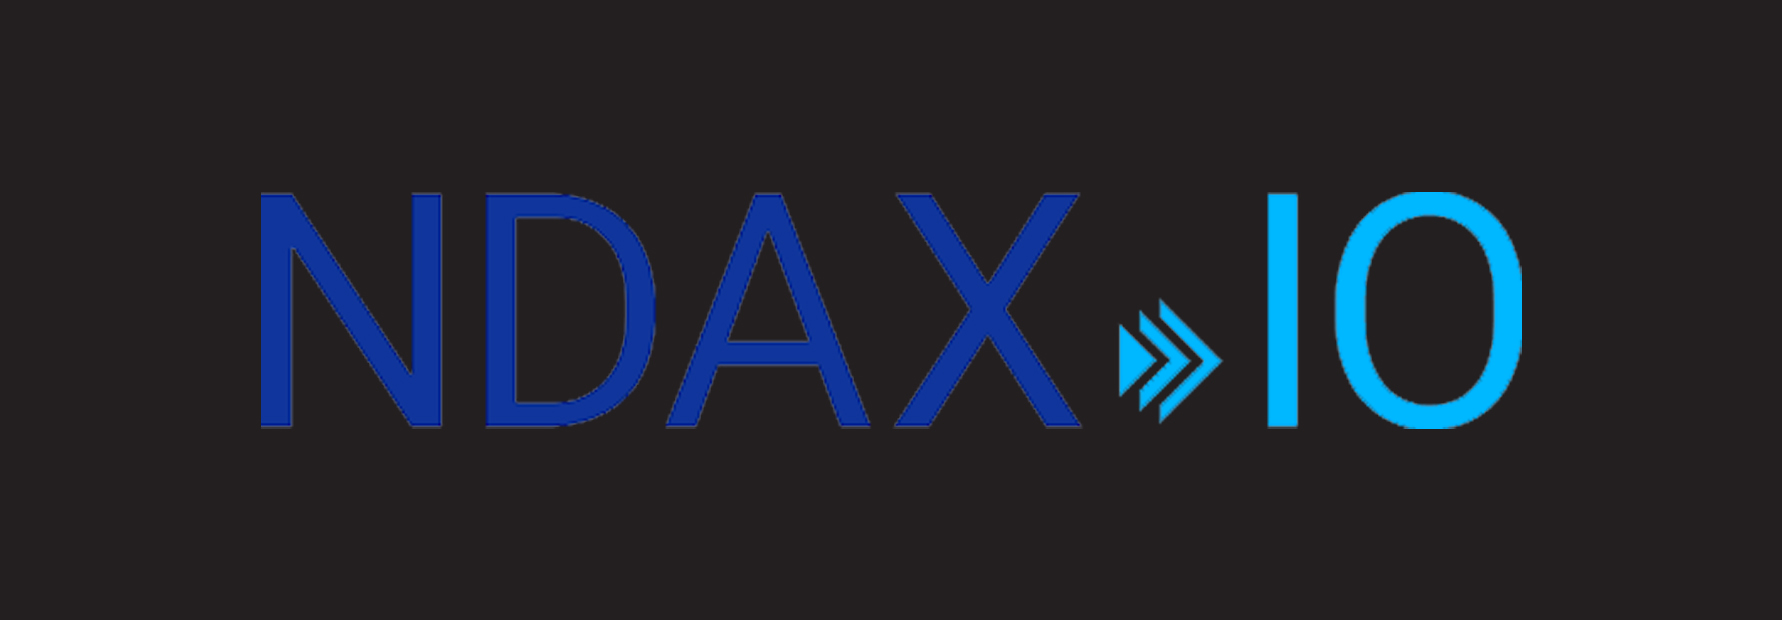 ndax-logo.jpg